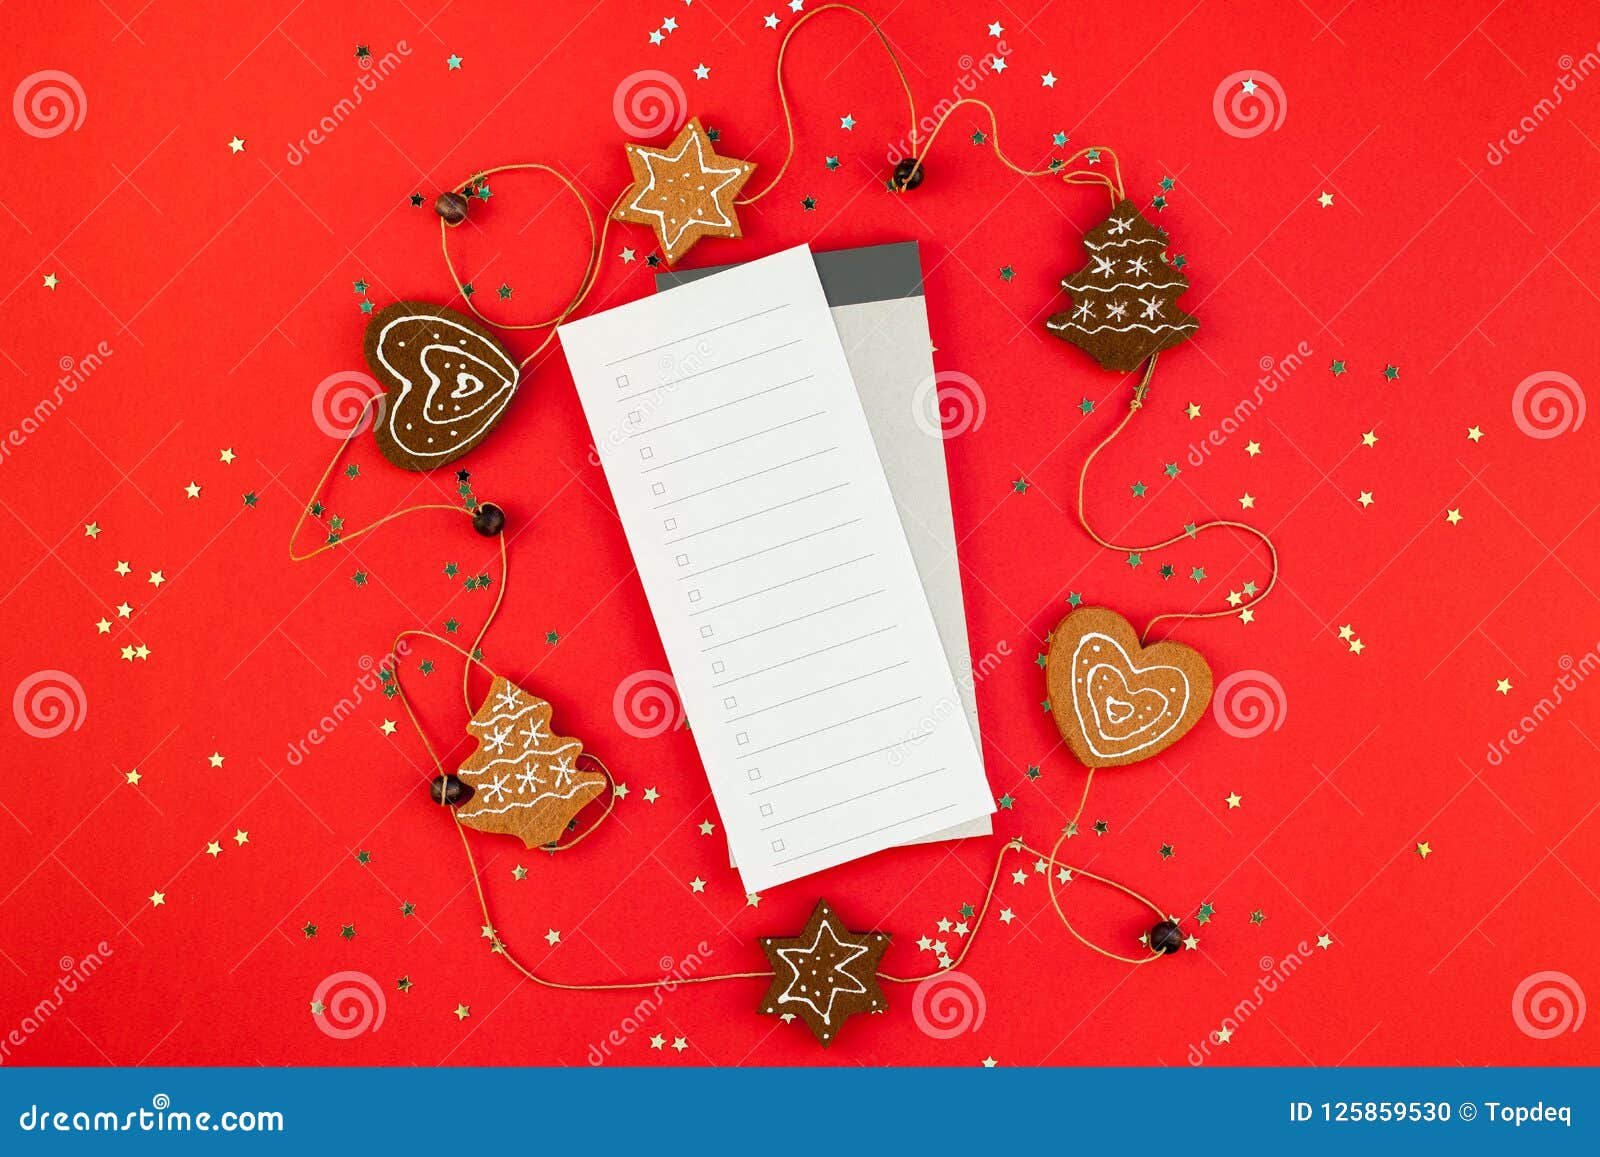 Christmas Checklist Planner Mockup With Glitter Stock Photo - Image of mockup, decor: 125859530